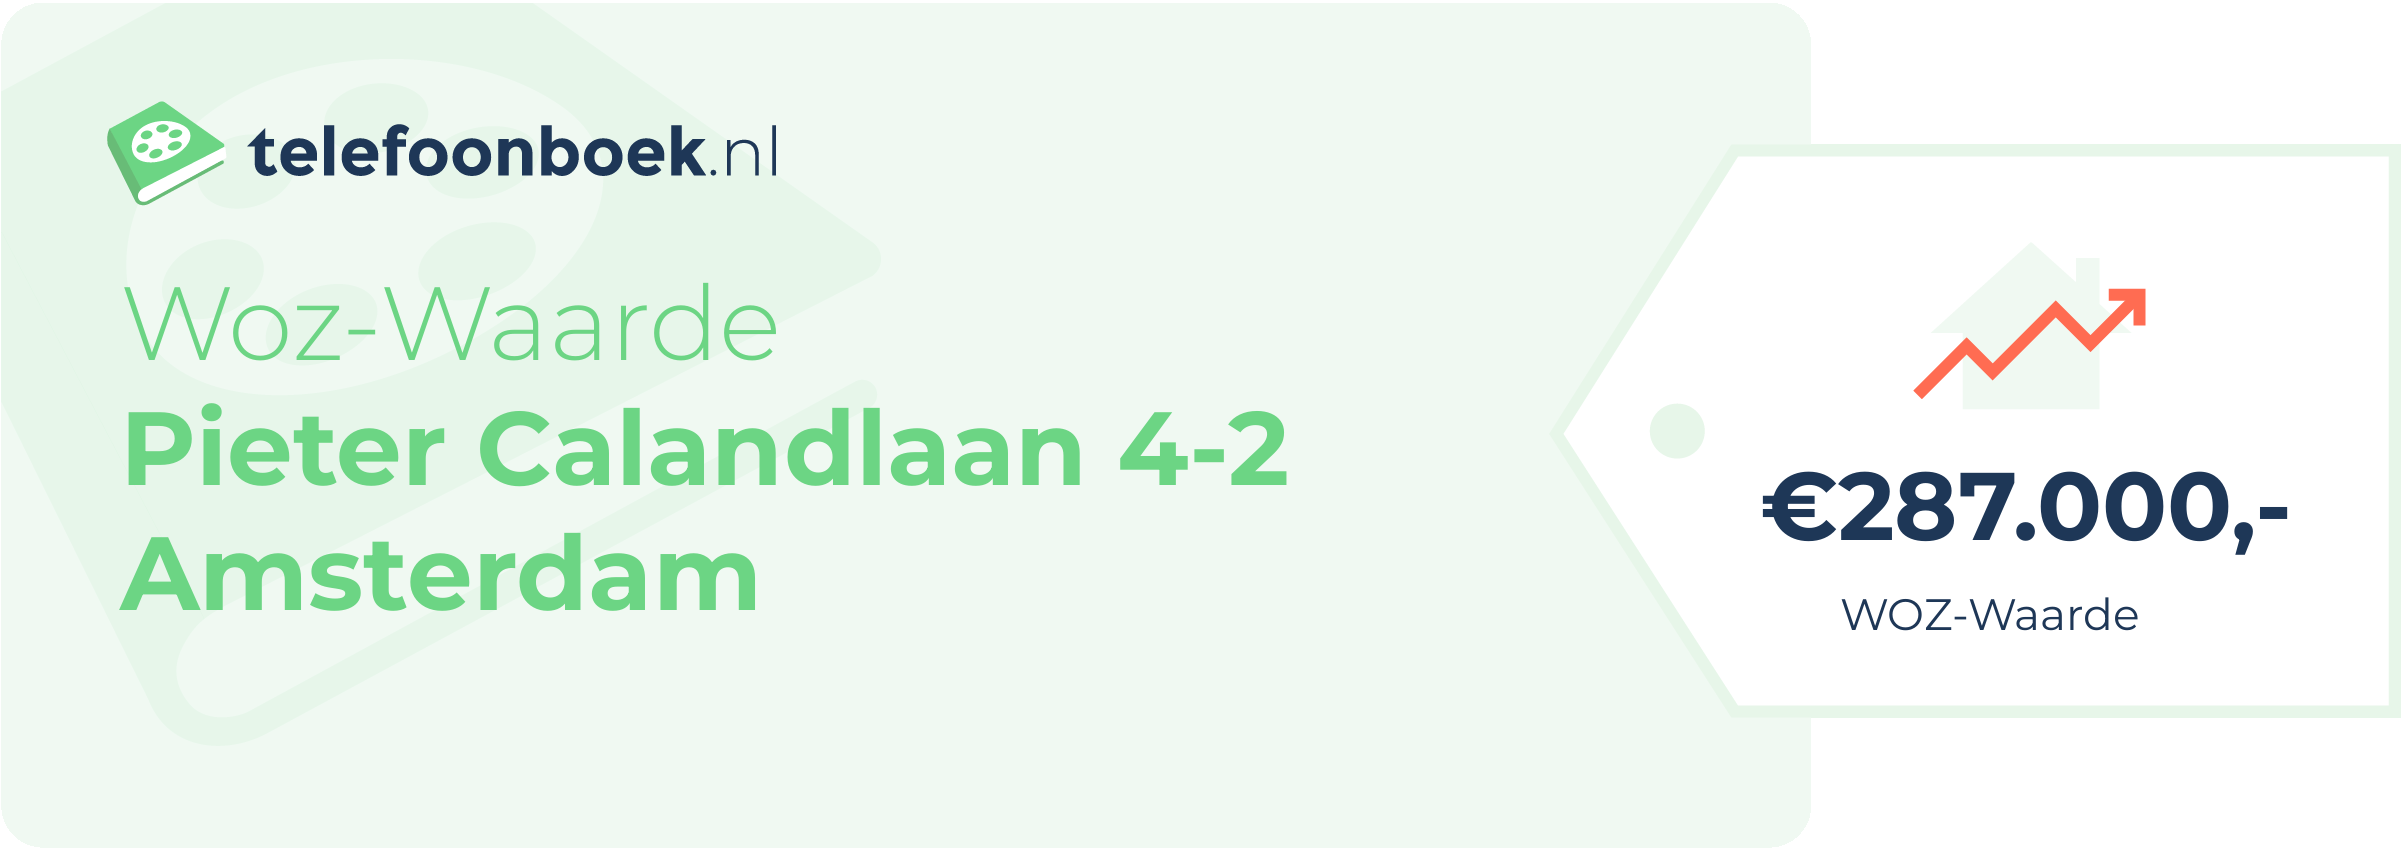 WOZ-waarde Pieter Calandlaan 4-2 Amsterdam